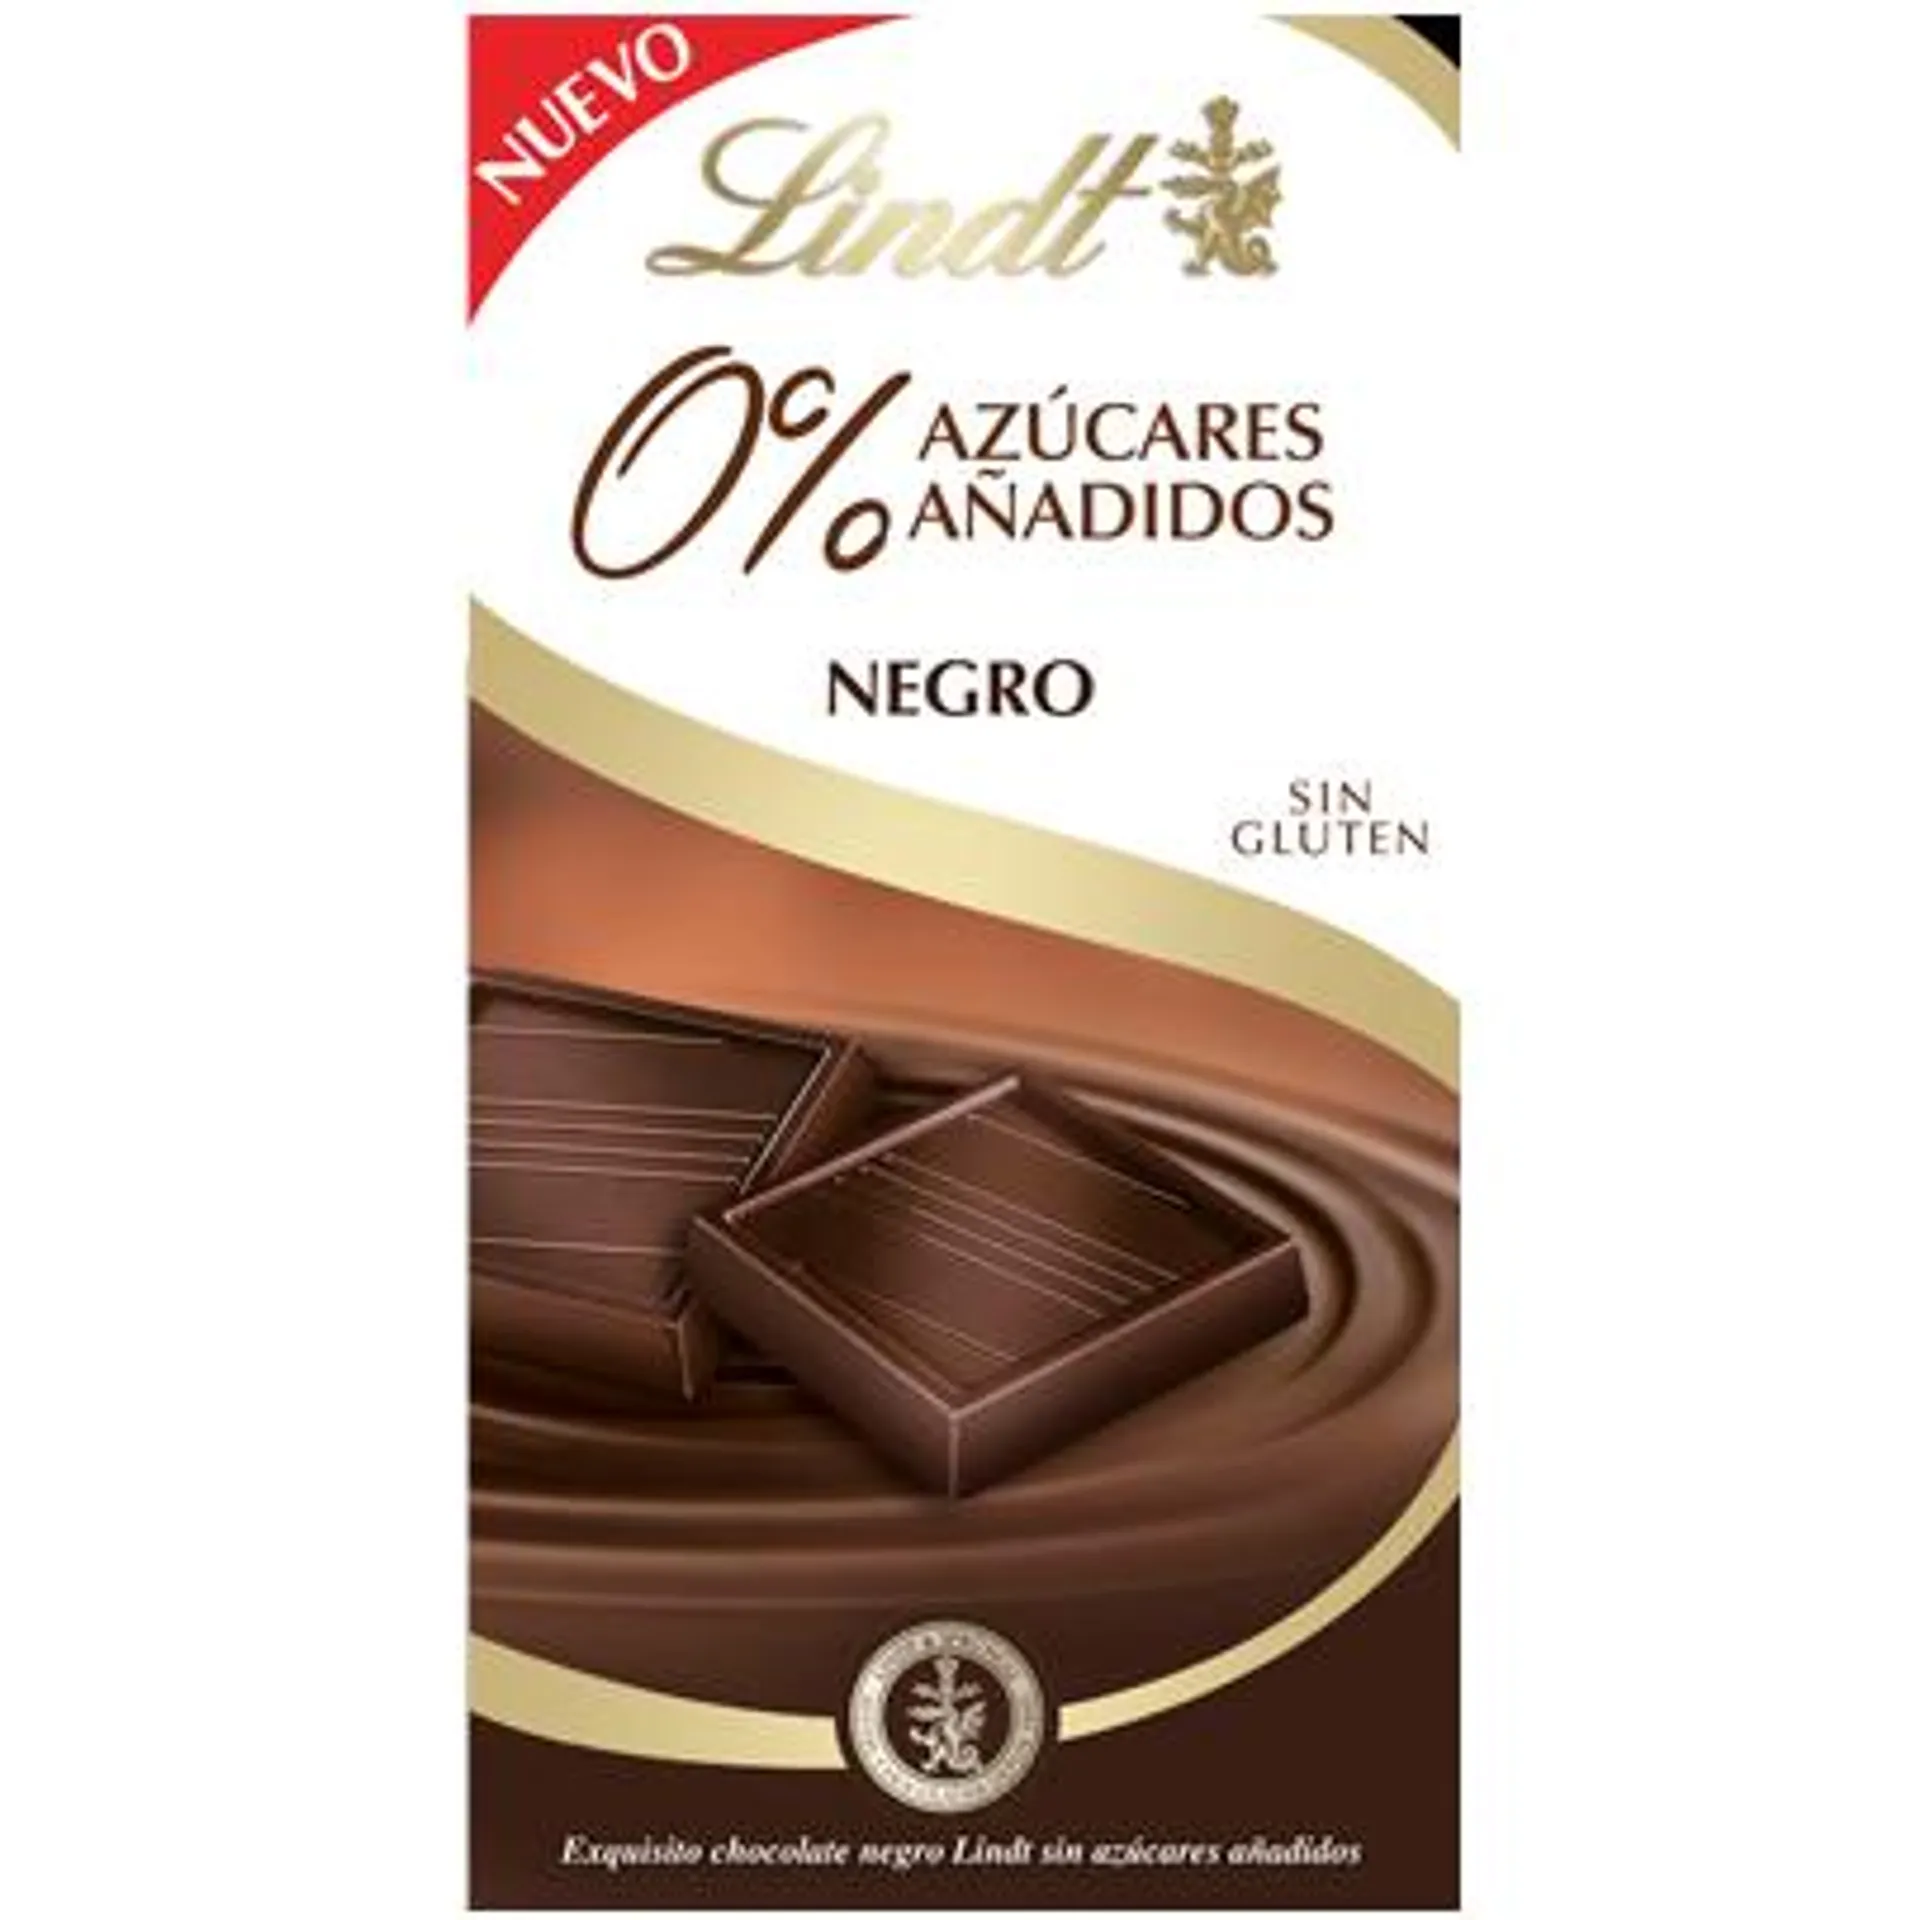 Tableta de Chocolate Negro sin azúcar Lindt - Lindt